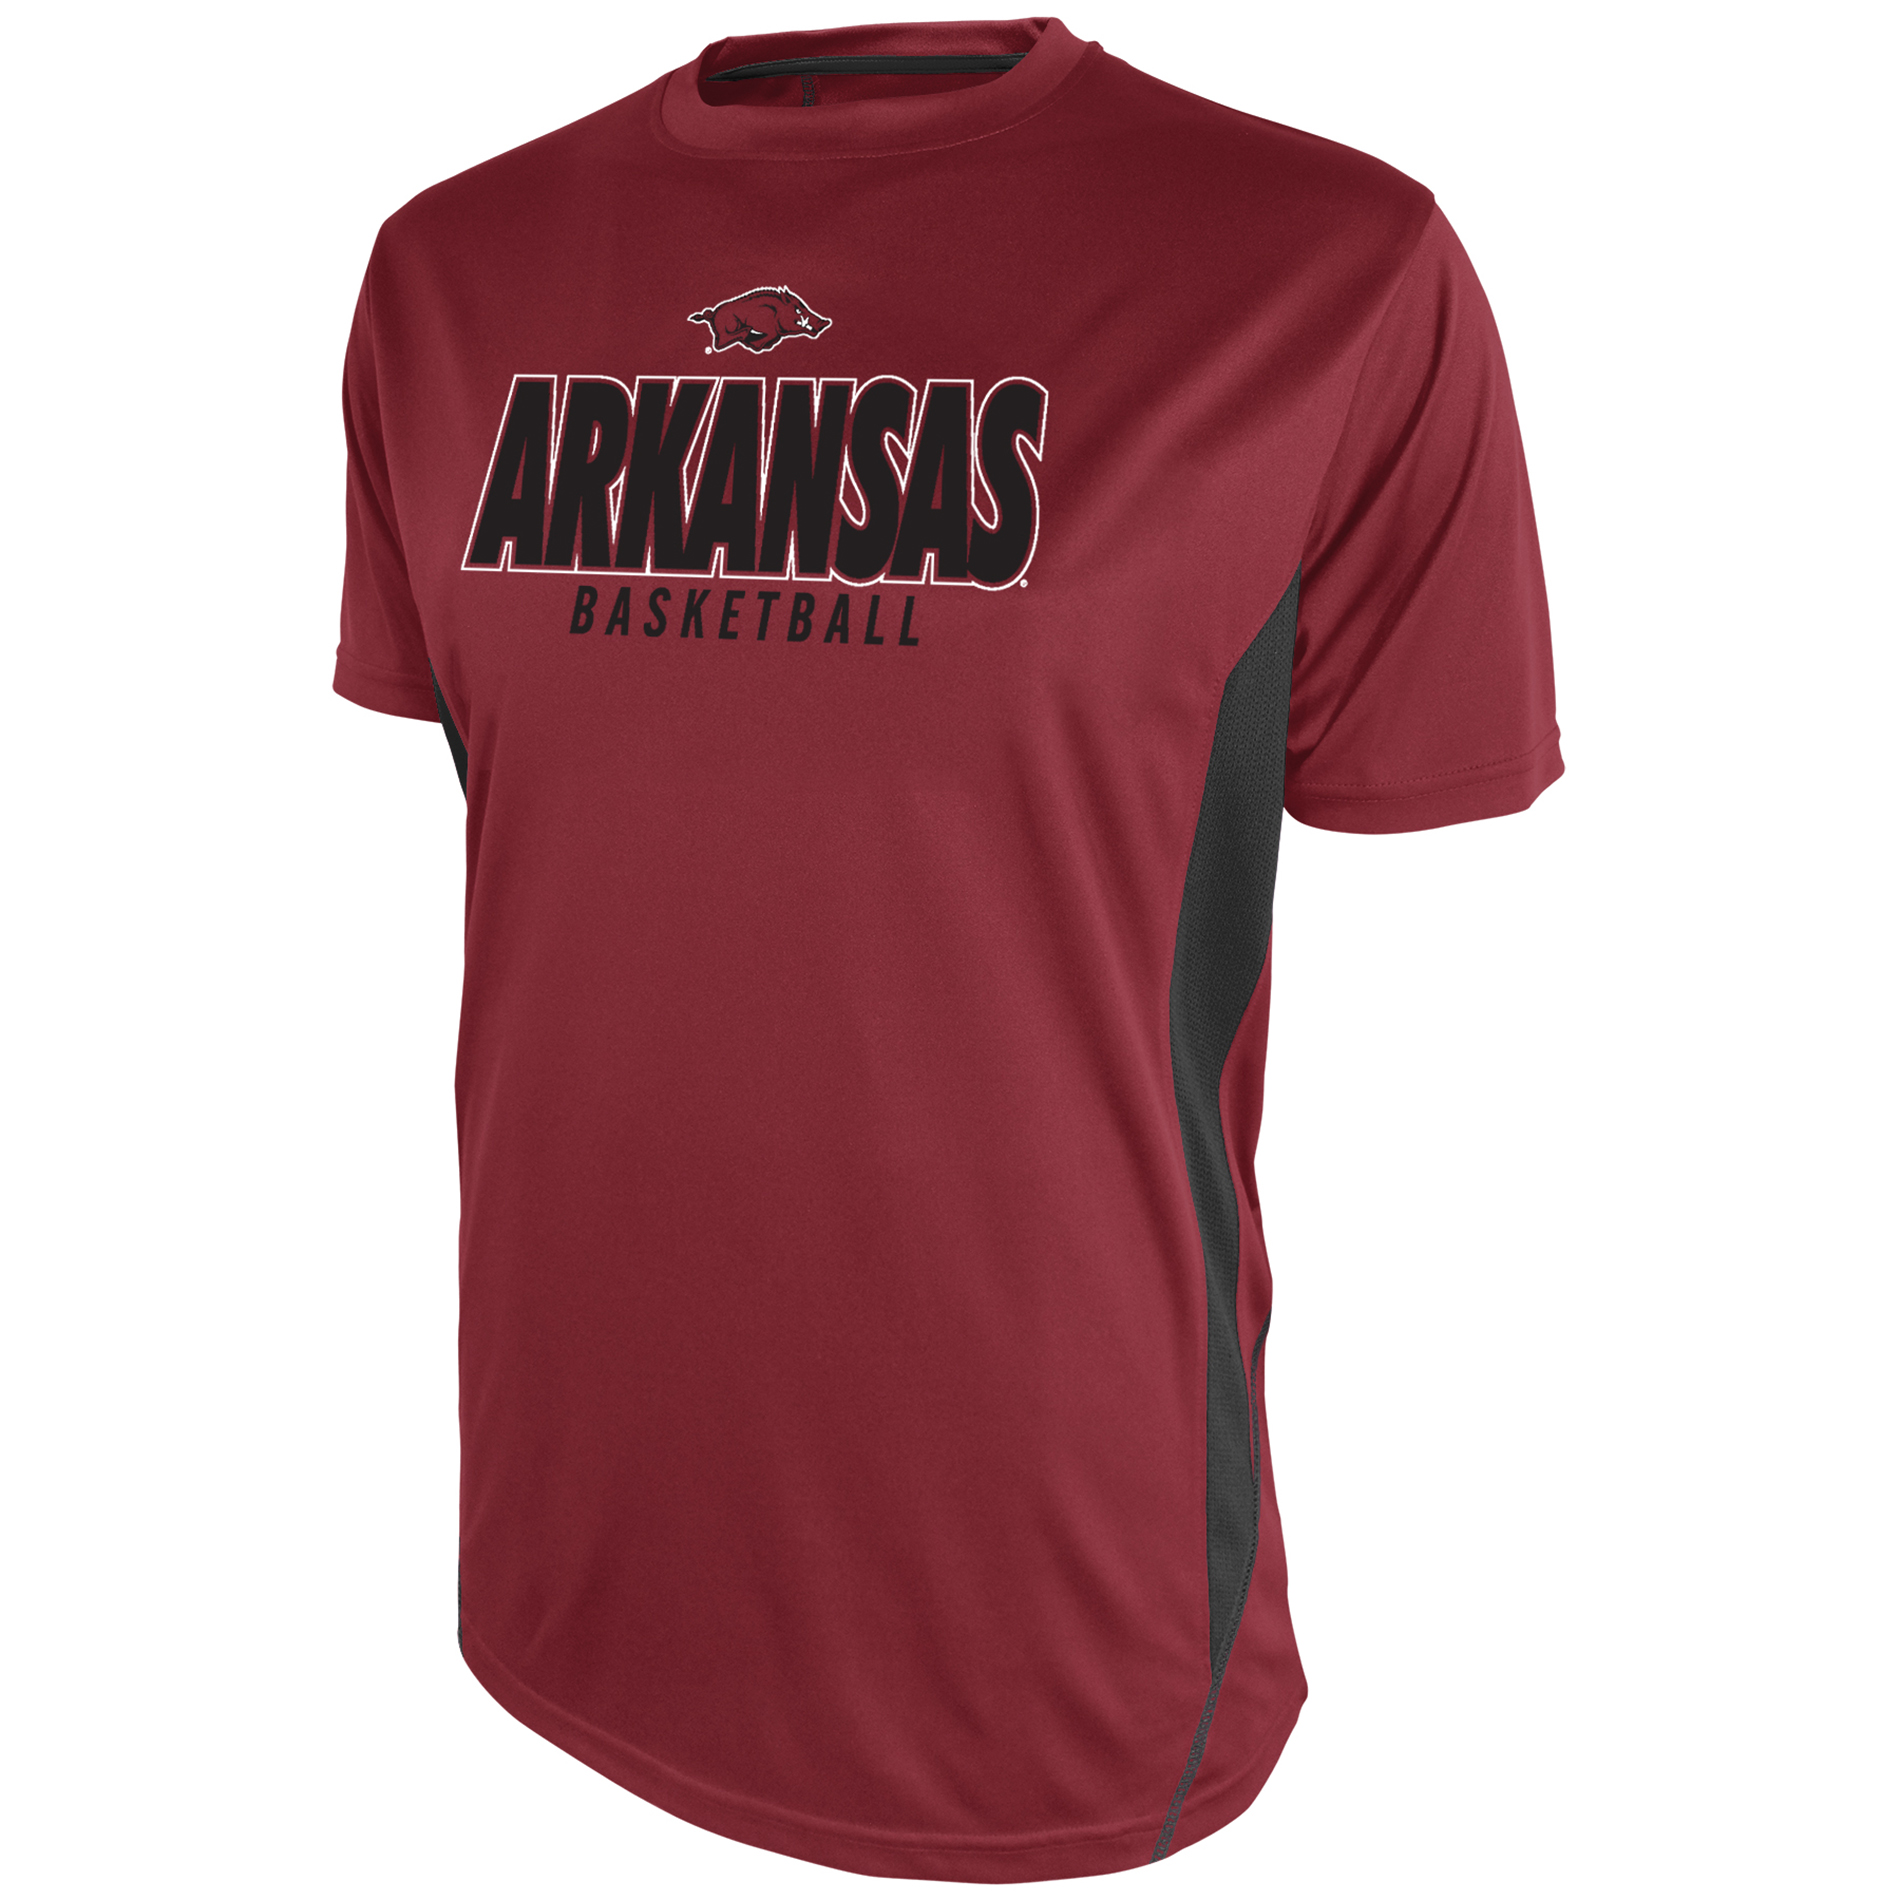 NCAA Mens' Arkansas Razorbacks Short Sleeve Athletic Tee